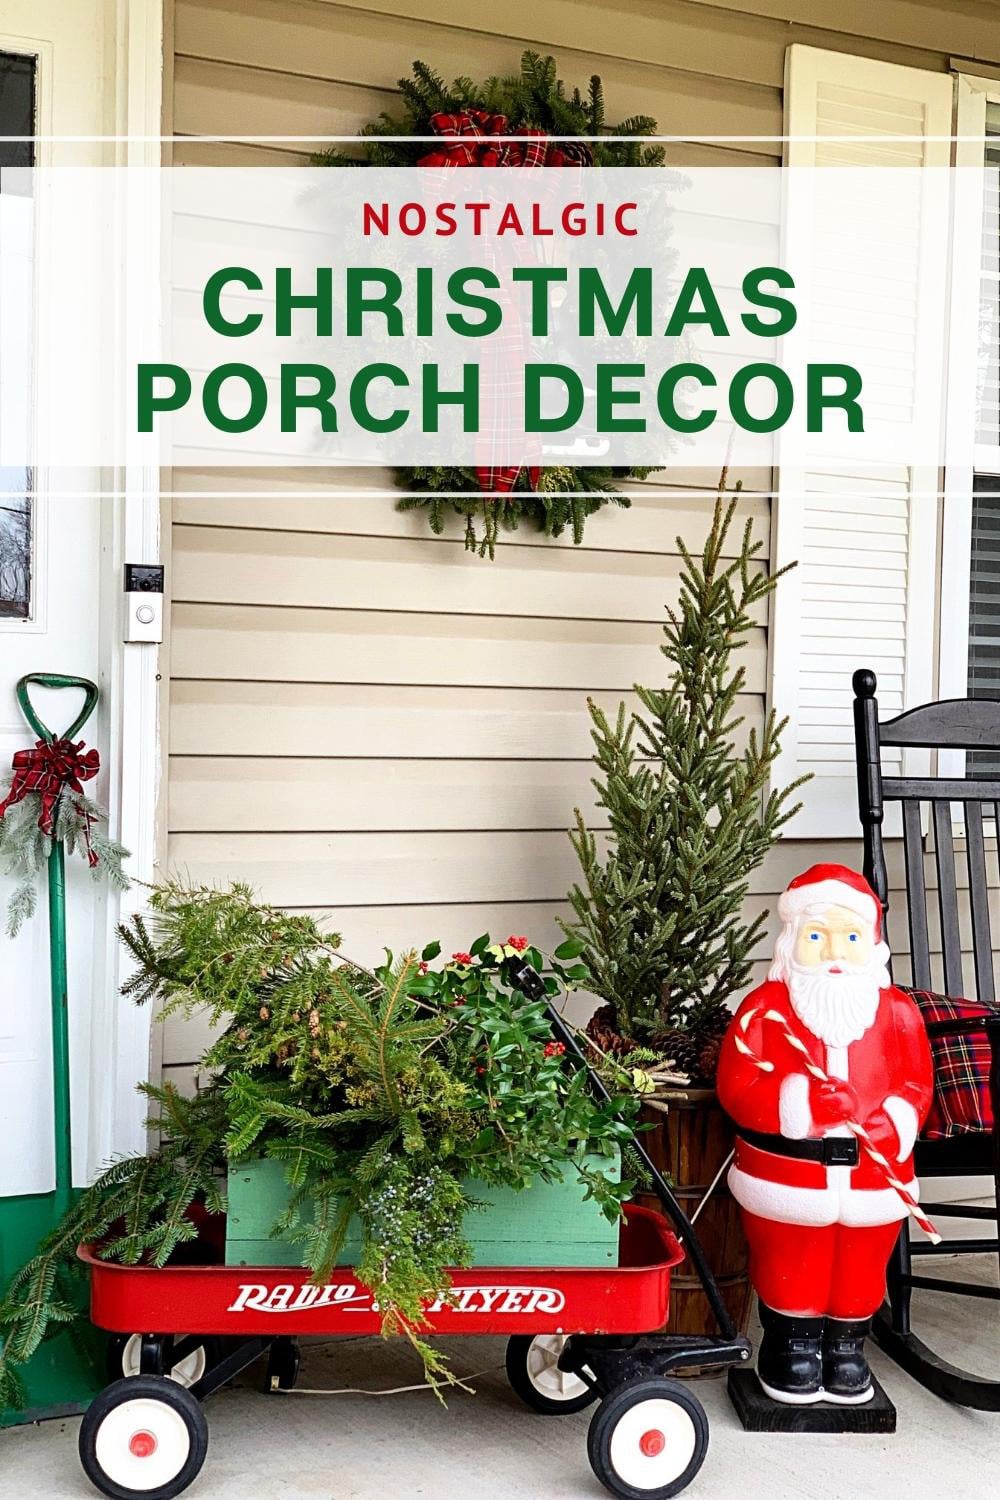 Radio Flyer wagon and blow mold Santa as Christmas porch decorations.